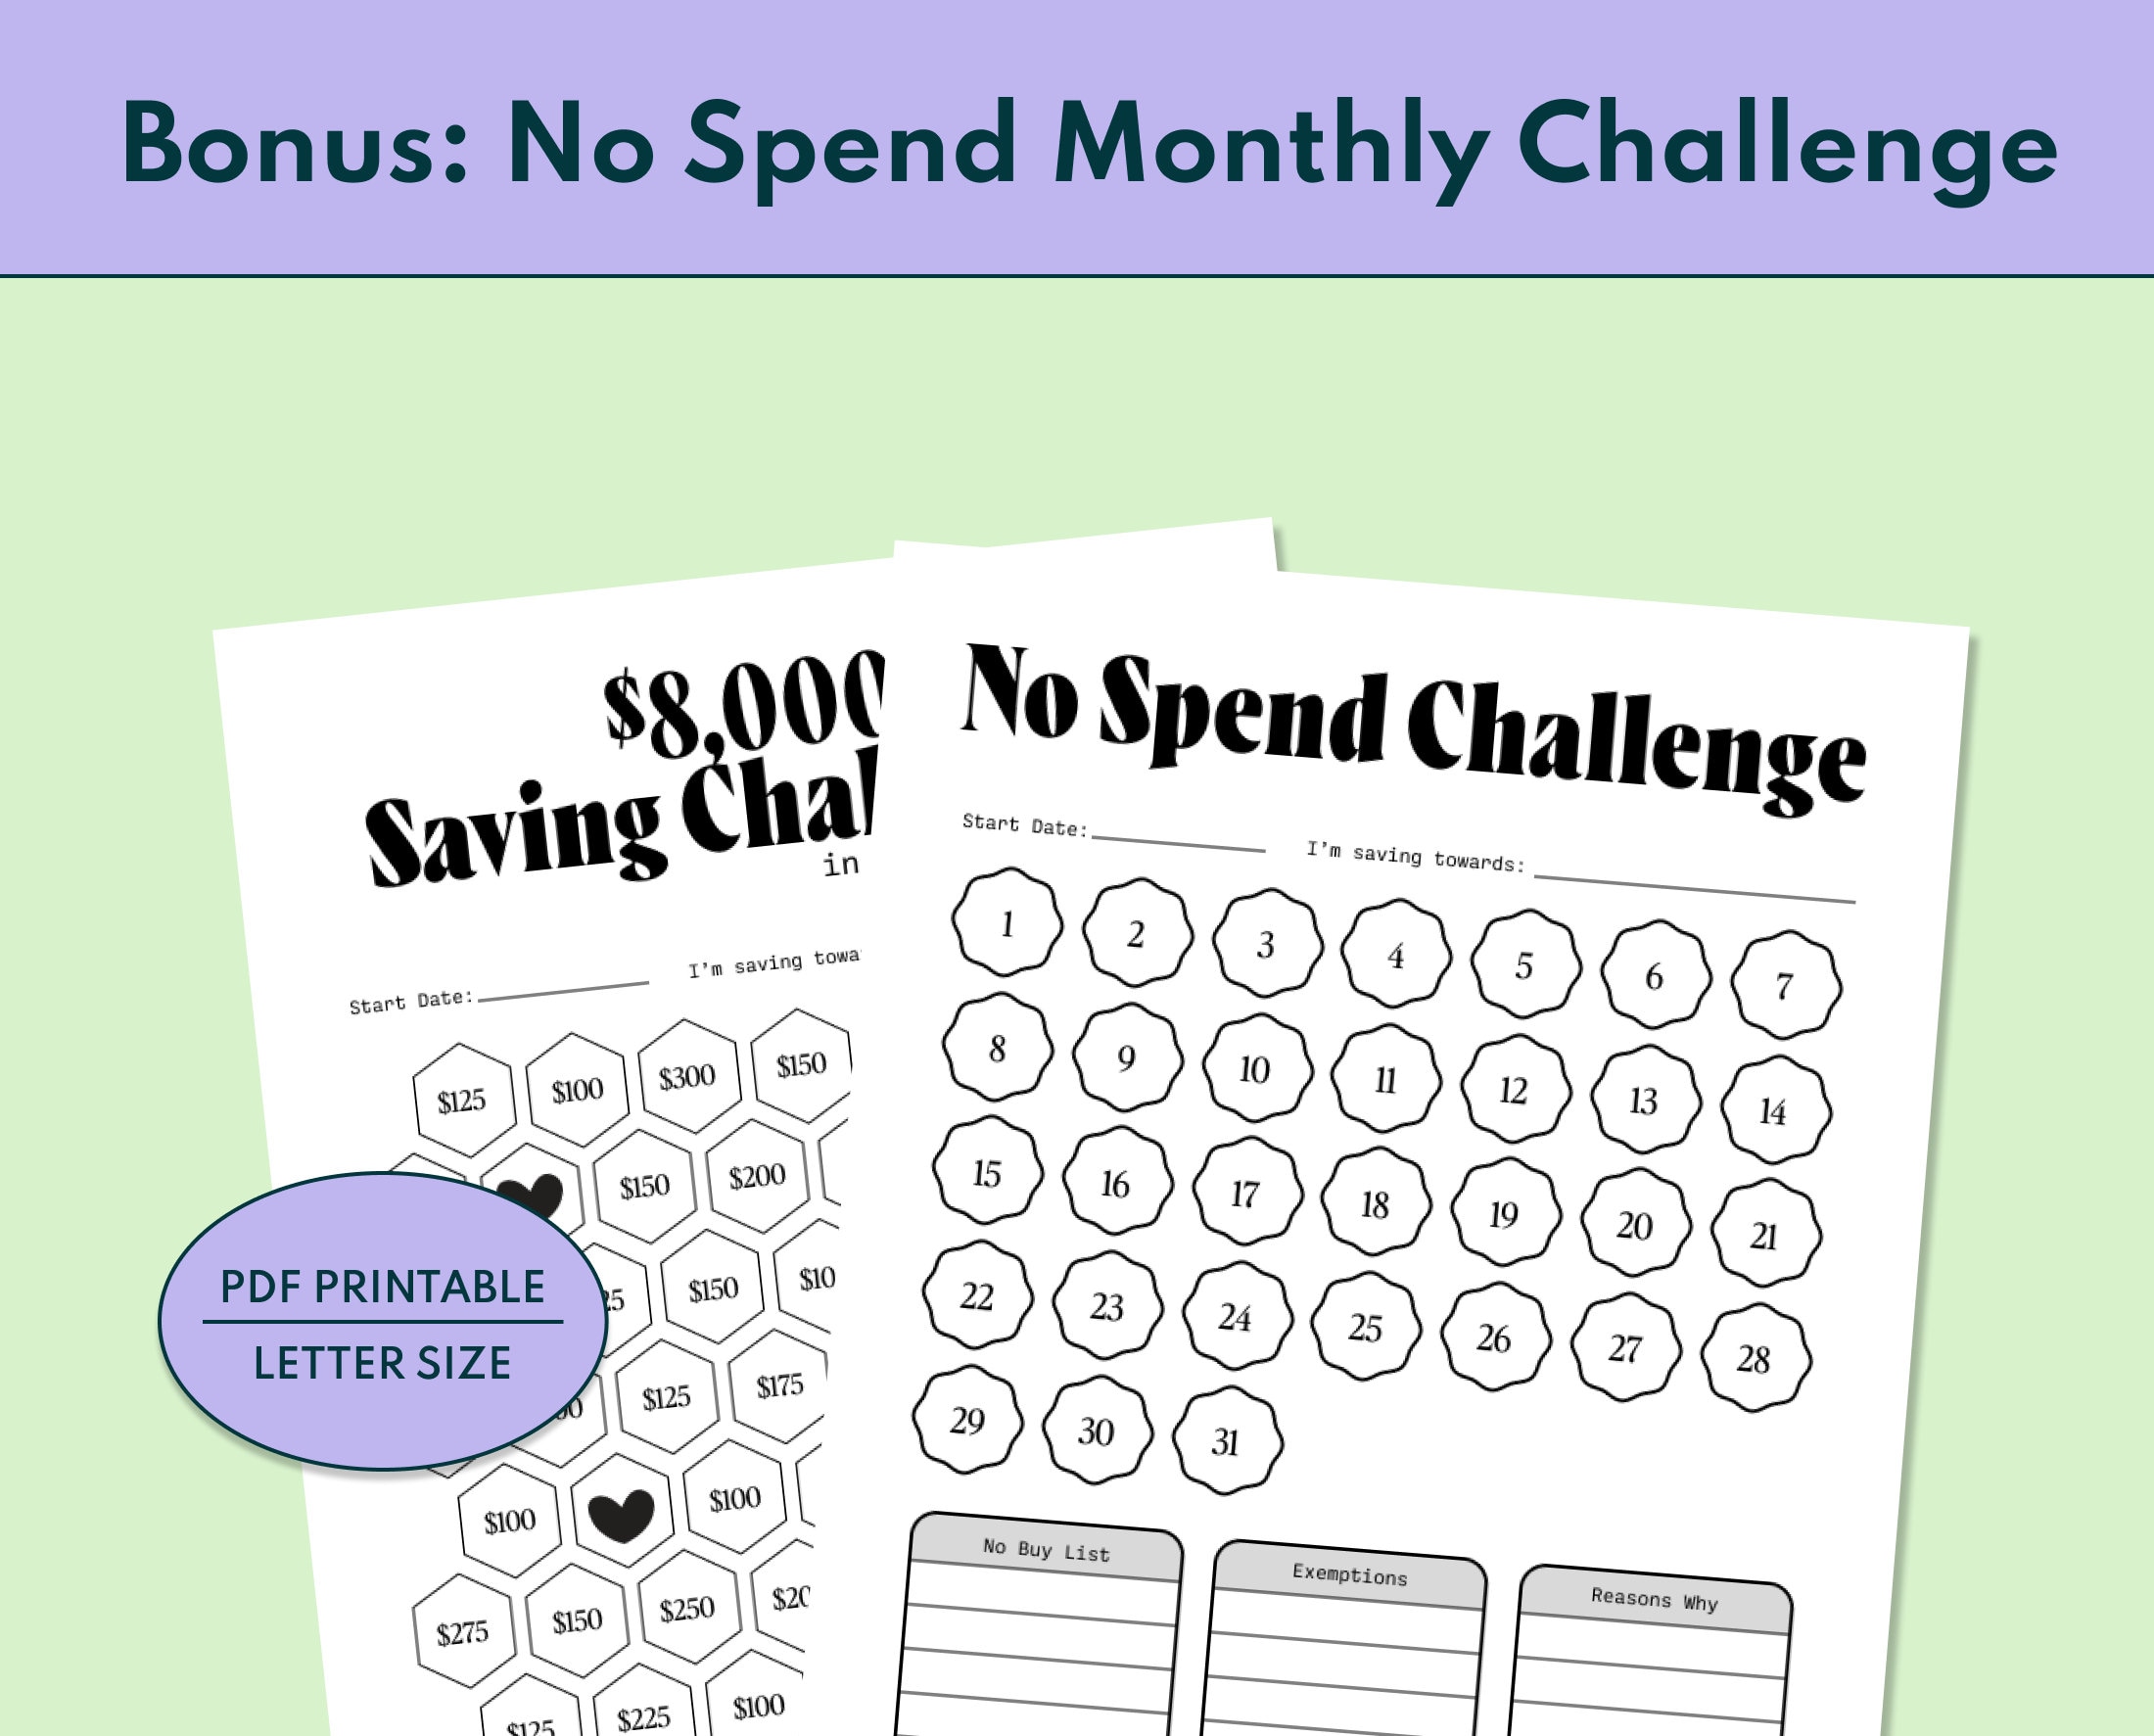 $8,000 Saving Challenge in 26 Weeks – mrsneat